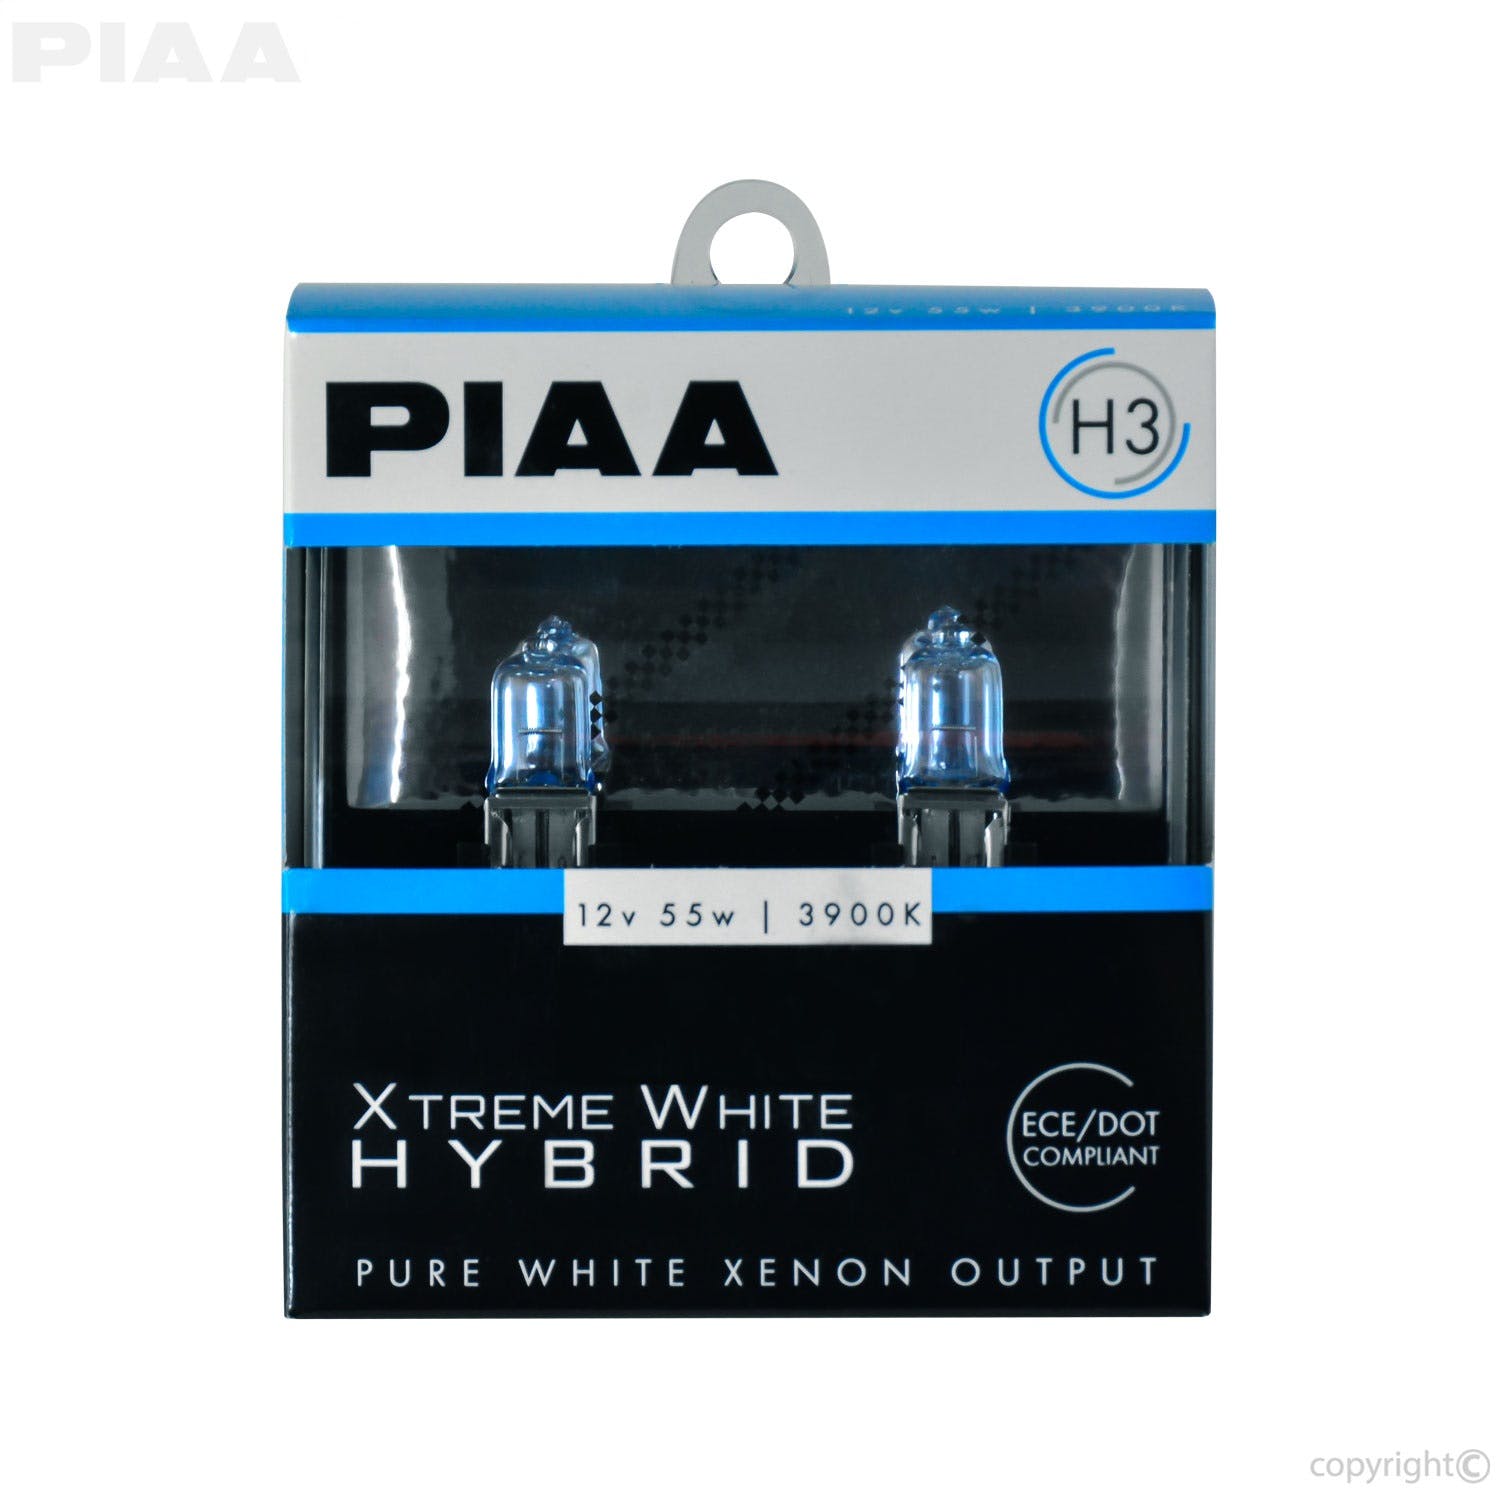 PIAA 23-10103 H3 Xtreme White Hybrid Twin Pack - 3900K - 12V 55W